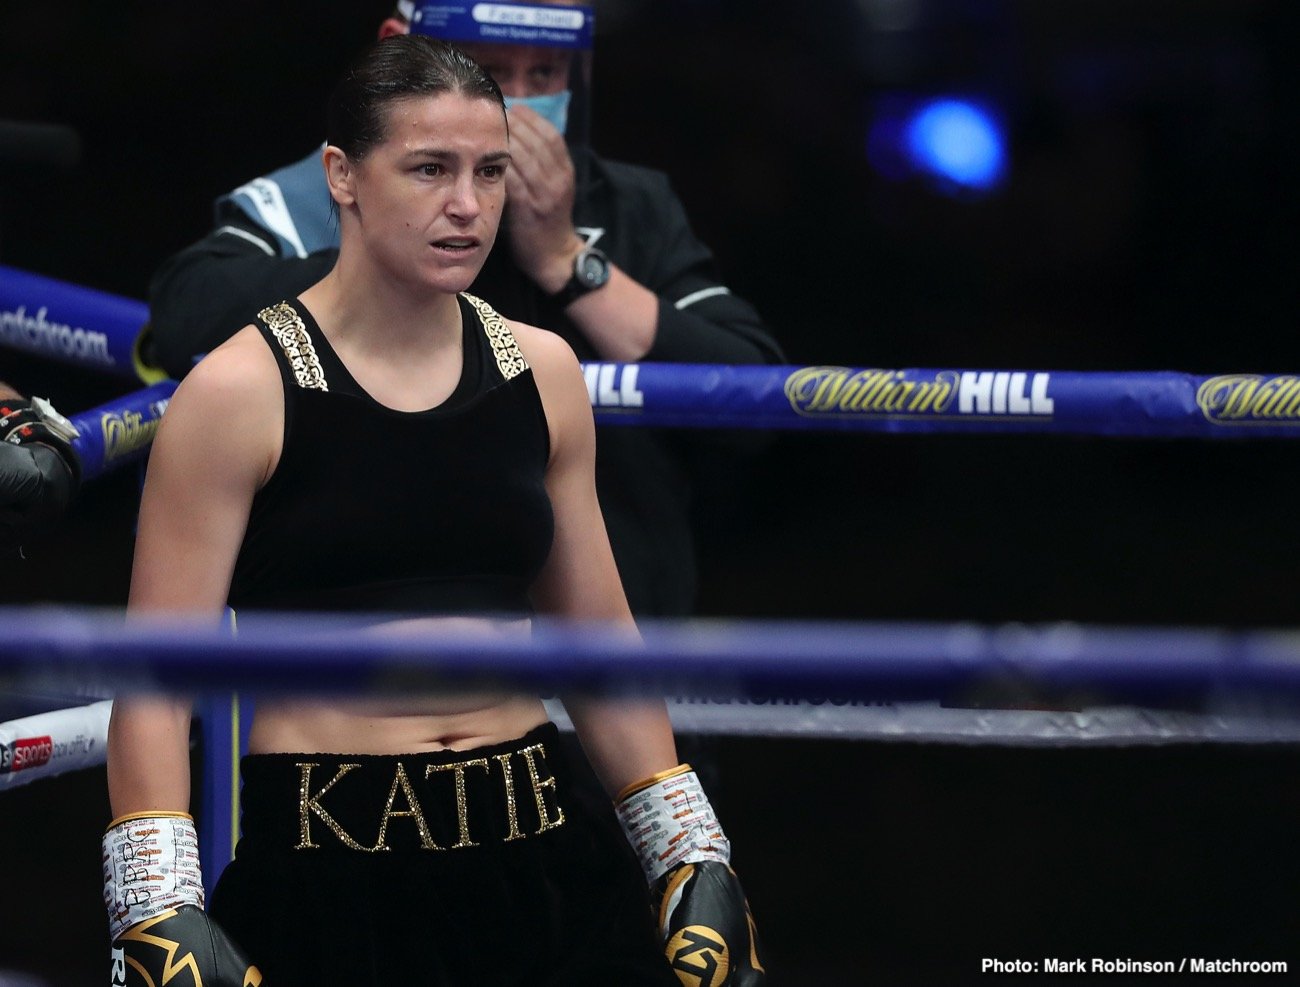 Katie Taylor boxing image / photo